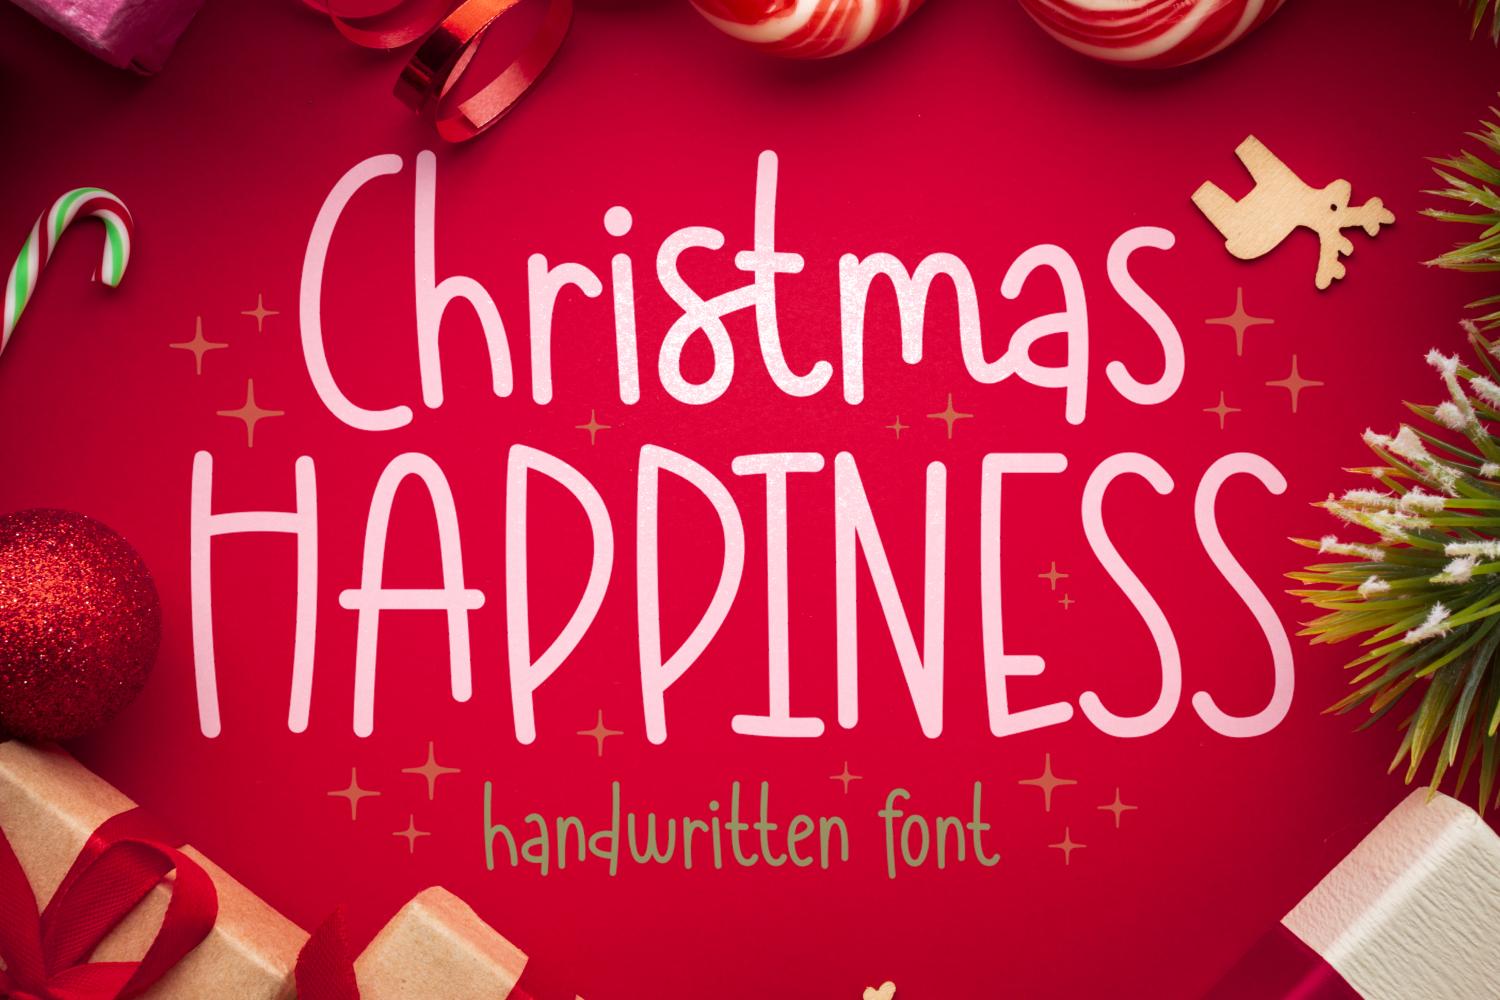 Christmas Happiness Font